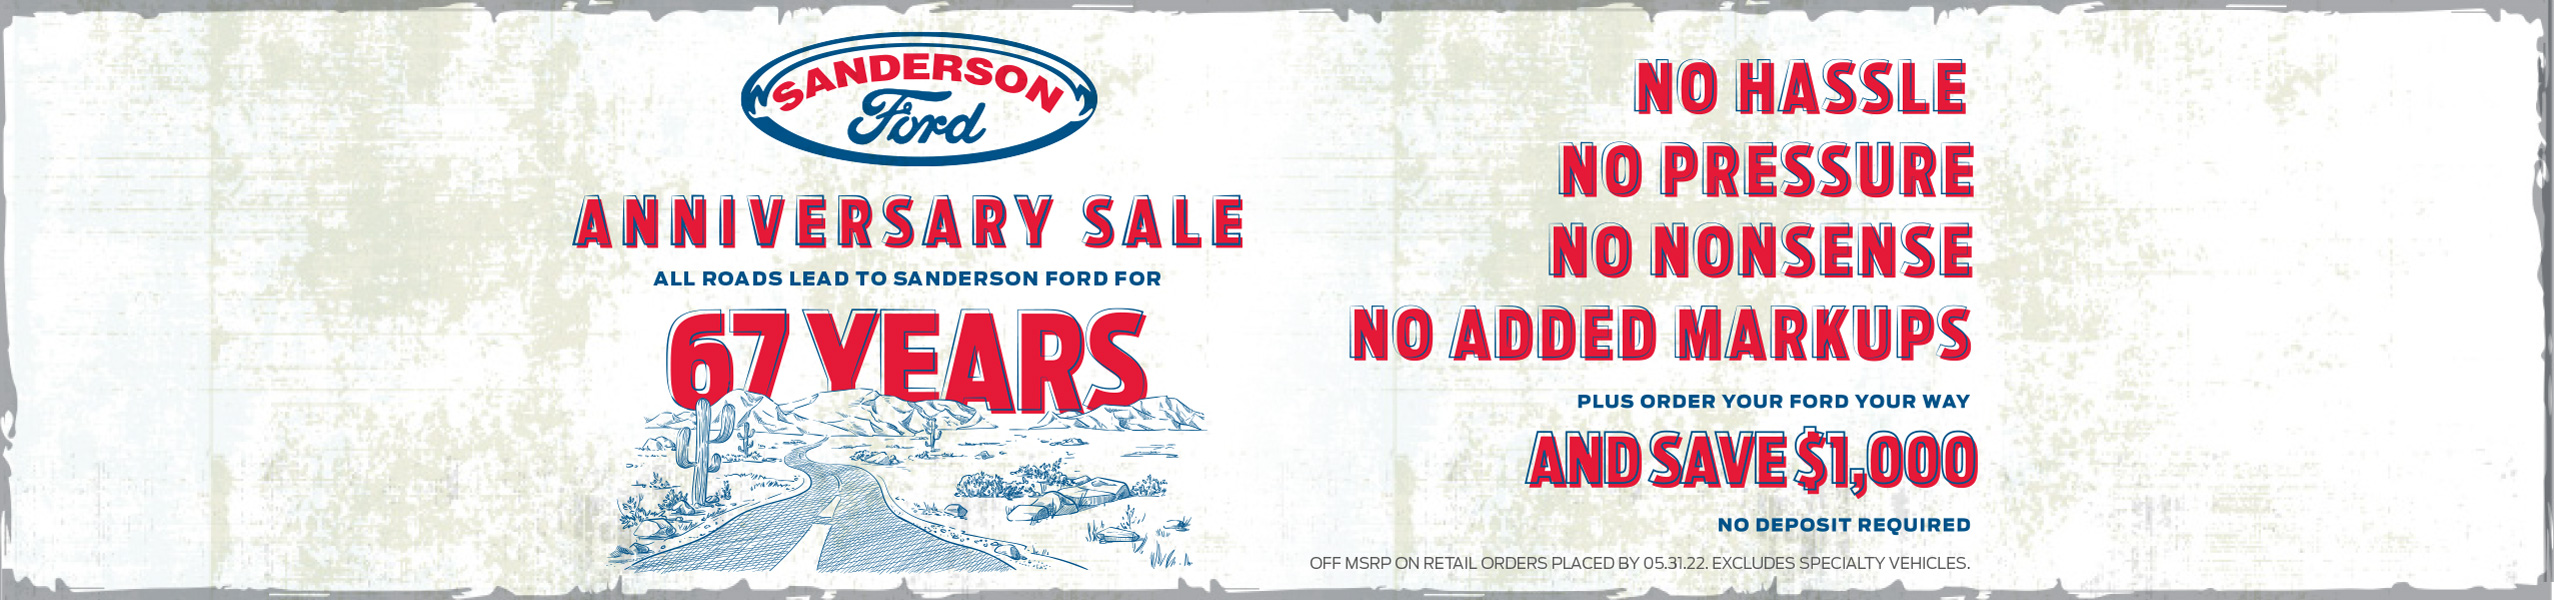 Sanderson Ford Anniversary Sale